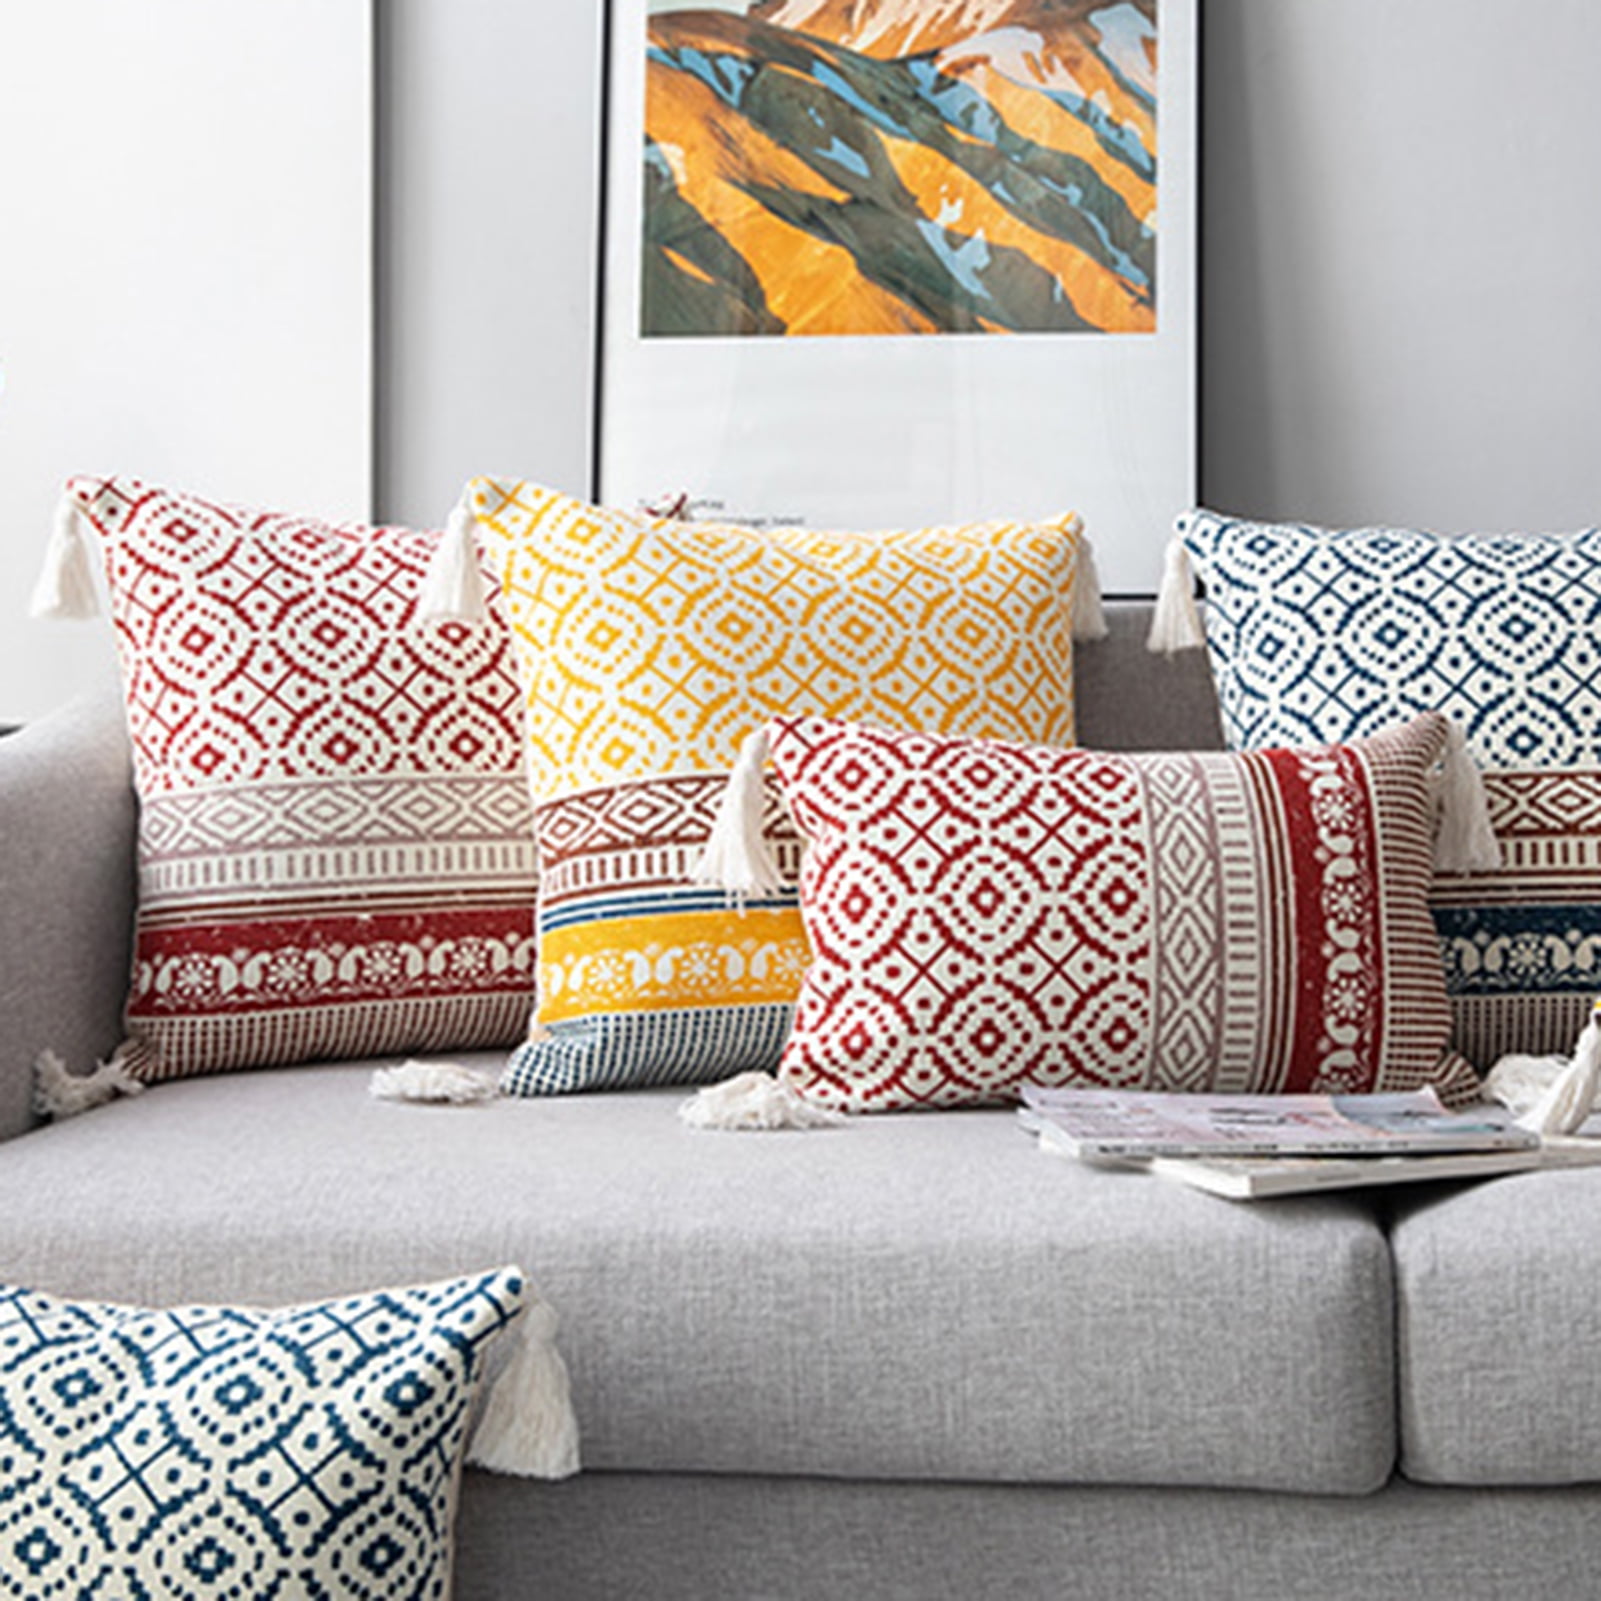 Details about   30*50cm Pillow Case Fashion Pillowcase Living room Home Textile Pillow Cover New 